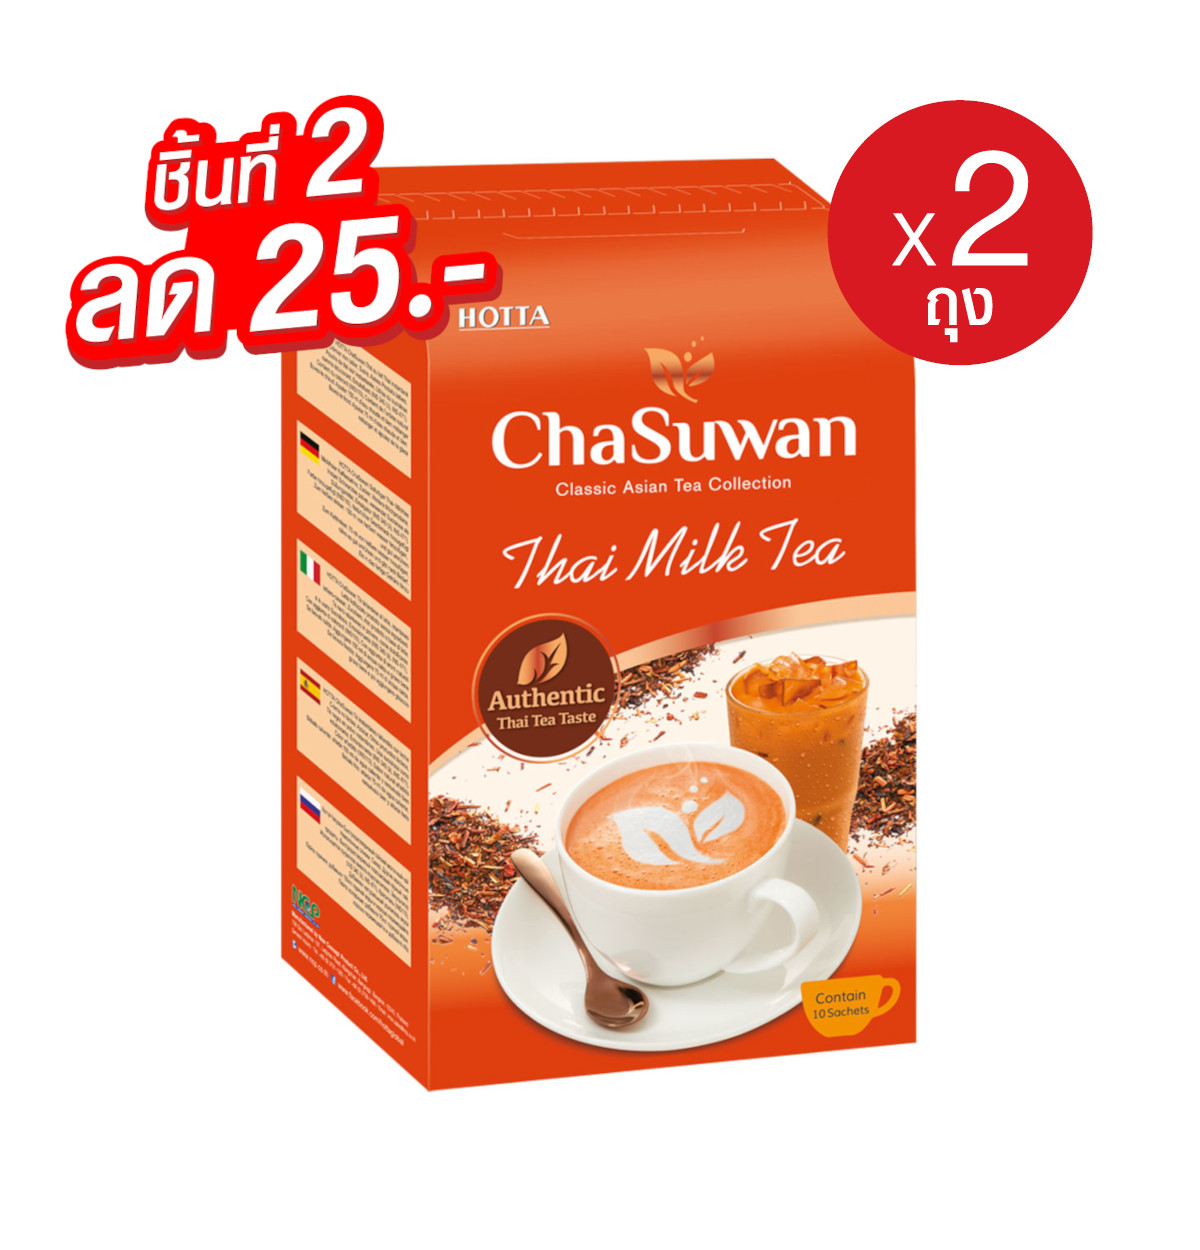 [Buy 2 Get 25.- Off] HOTTA Chasuwan Instant Thai Milk Tea 16g.x 10 Sachets x 2